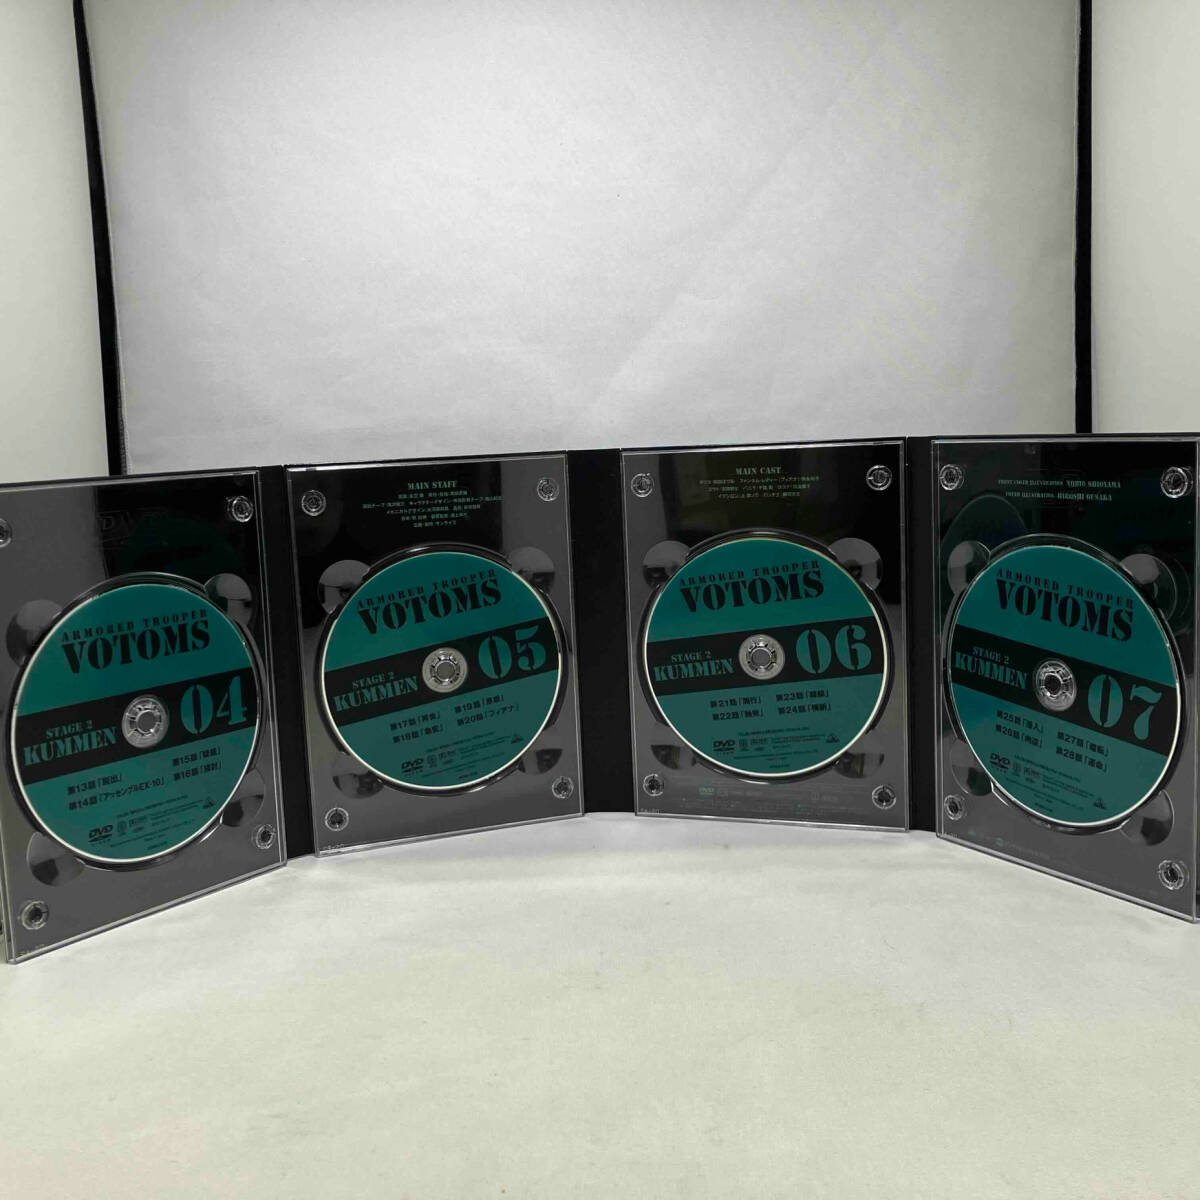 DVD 装甲騎兵ボトムズ DVDメモリアルボックスの画像5